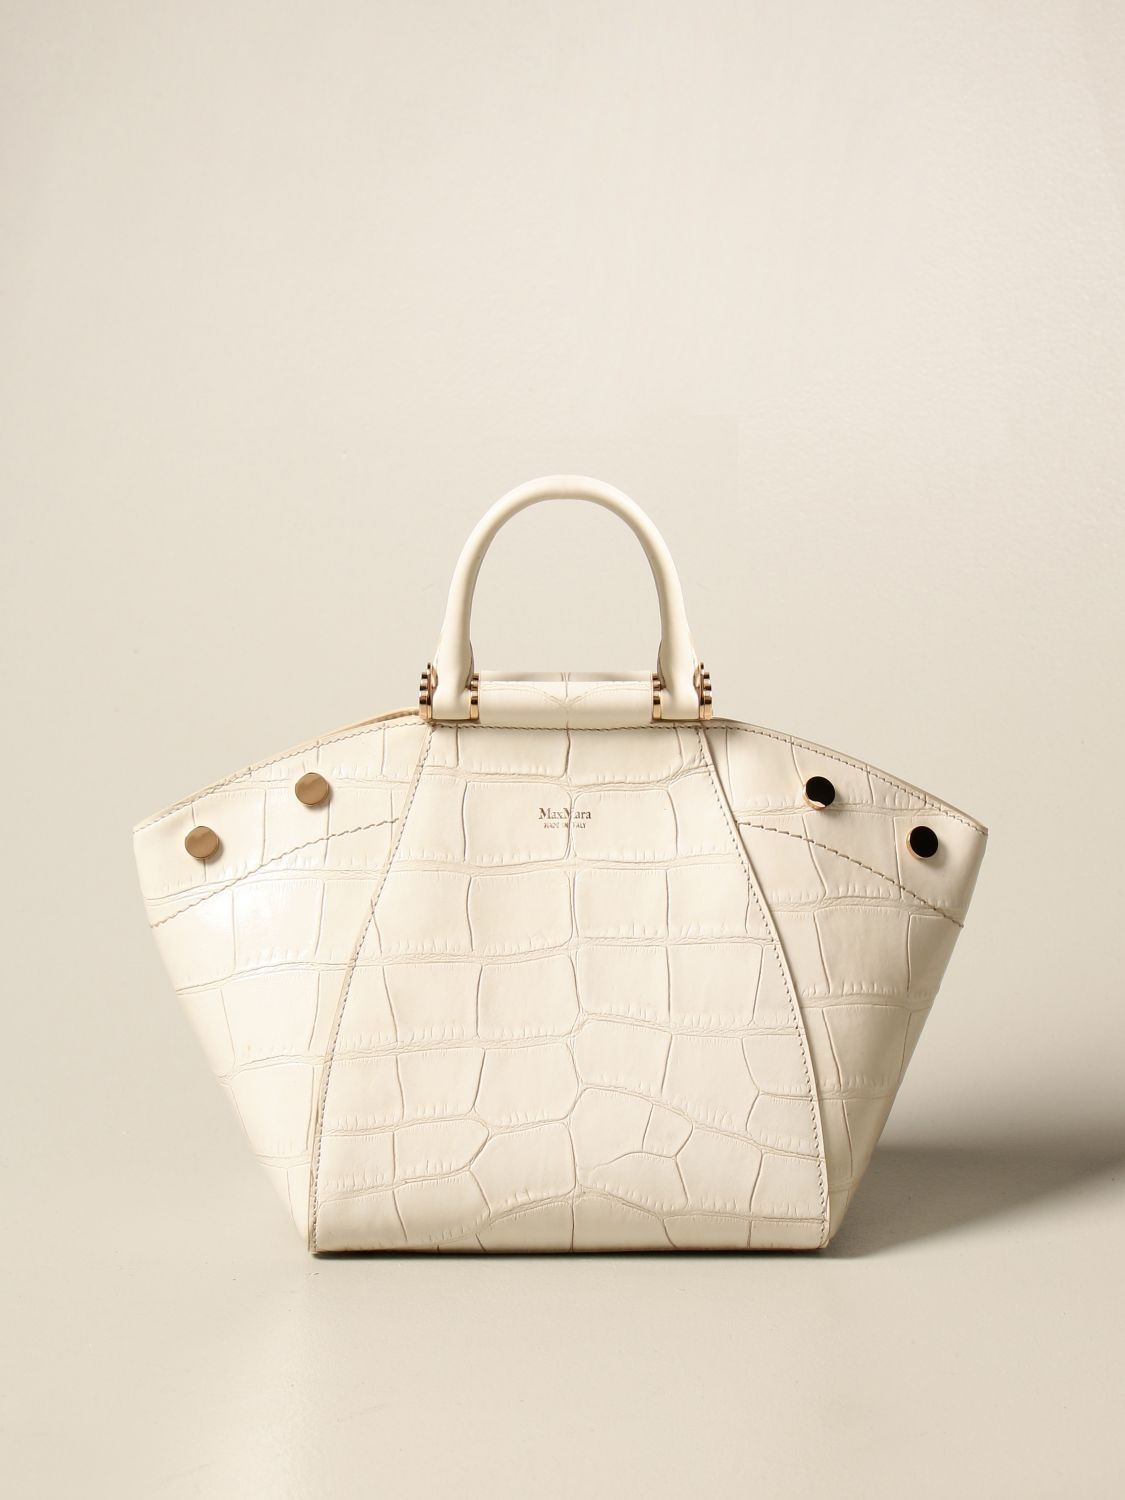 MAX MARA: Anitas2 bag with crocodile print - White | Max Mara handbag ...